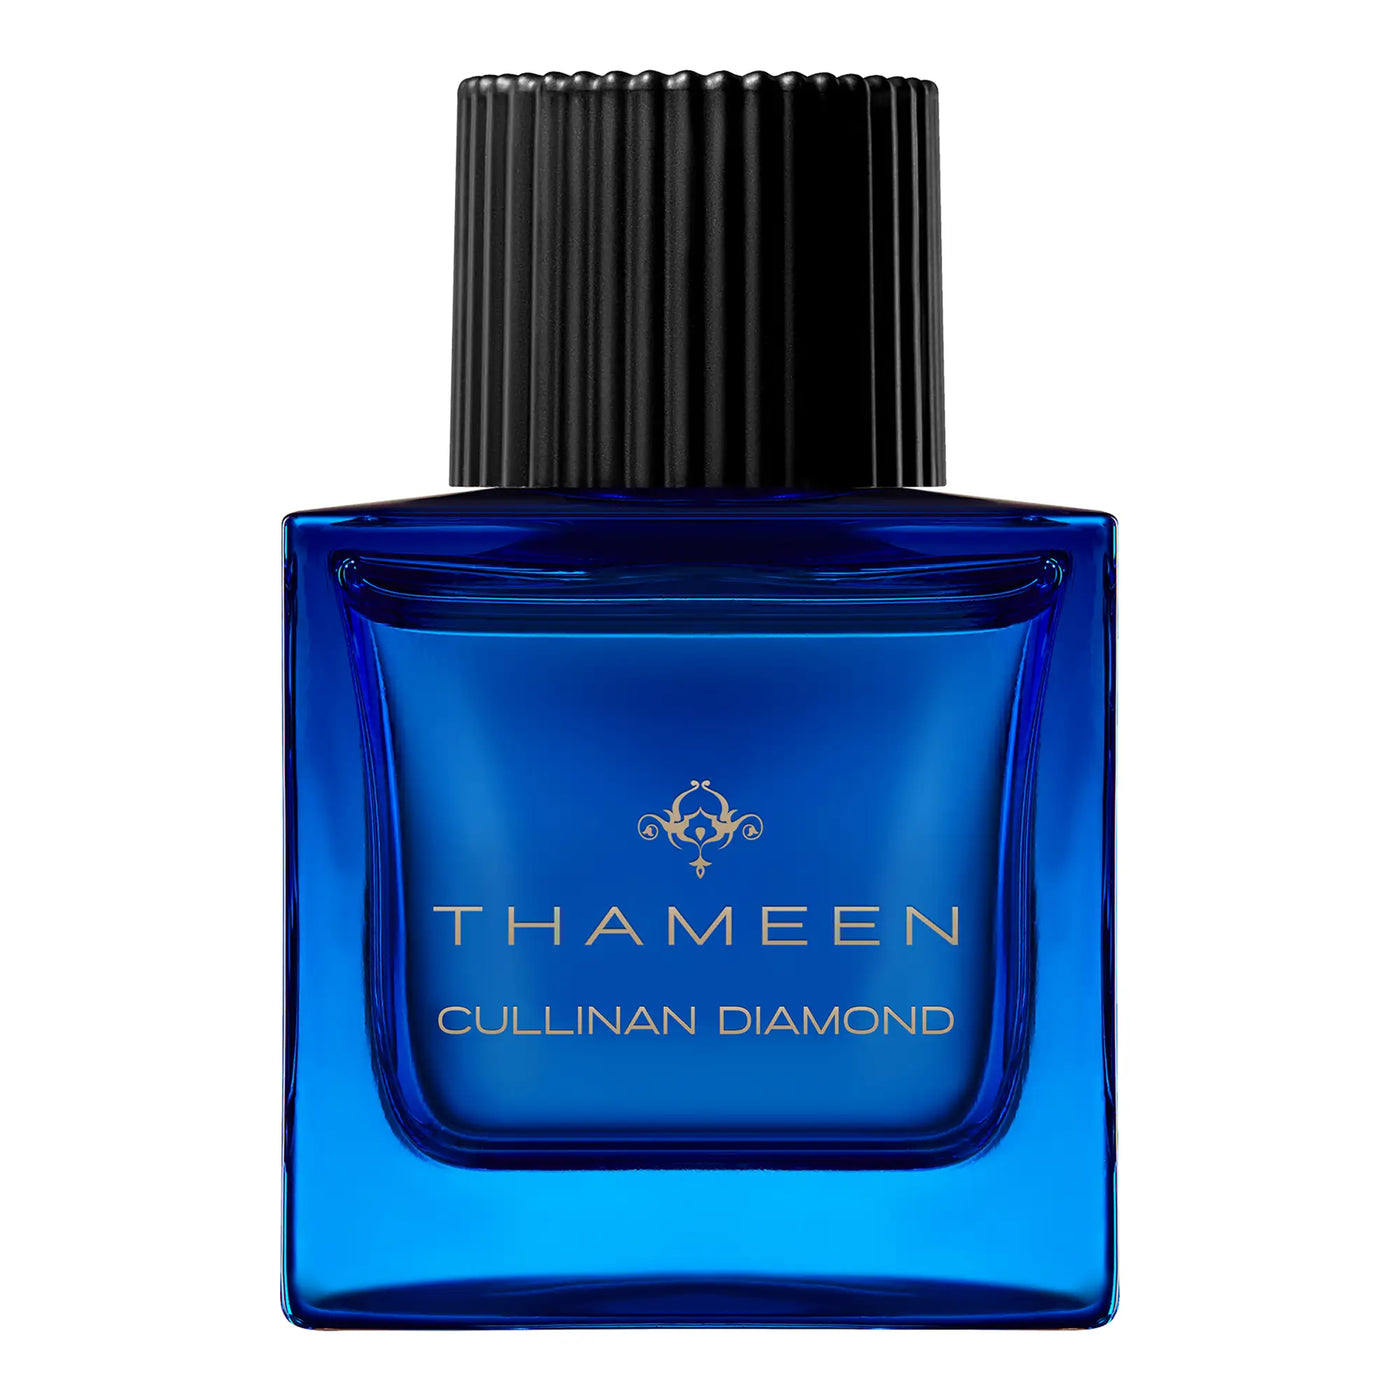 Thameen London Cullinan Diamond - 50ml - Gharyal by Collectibles 